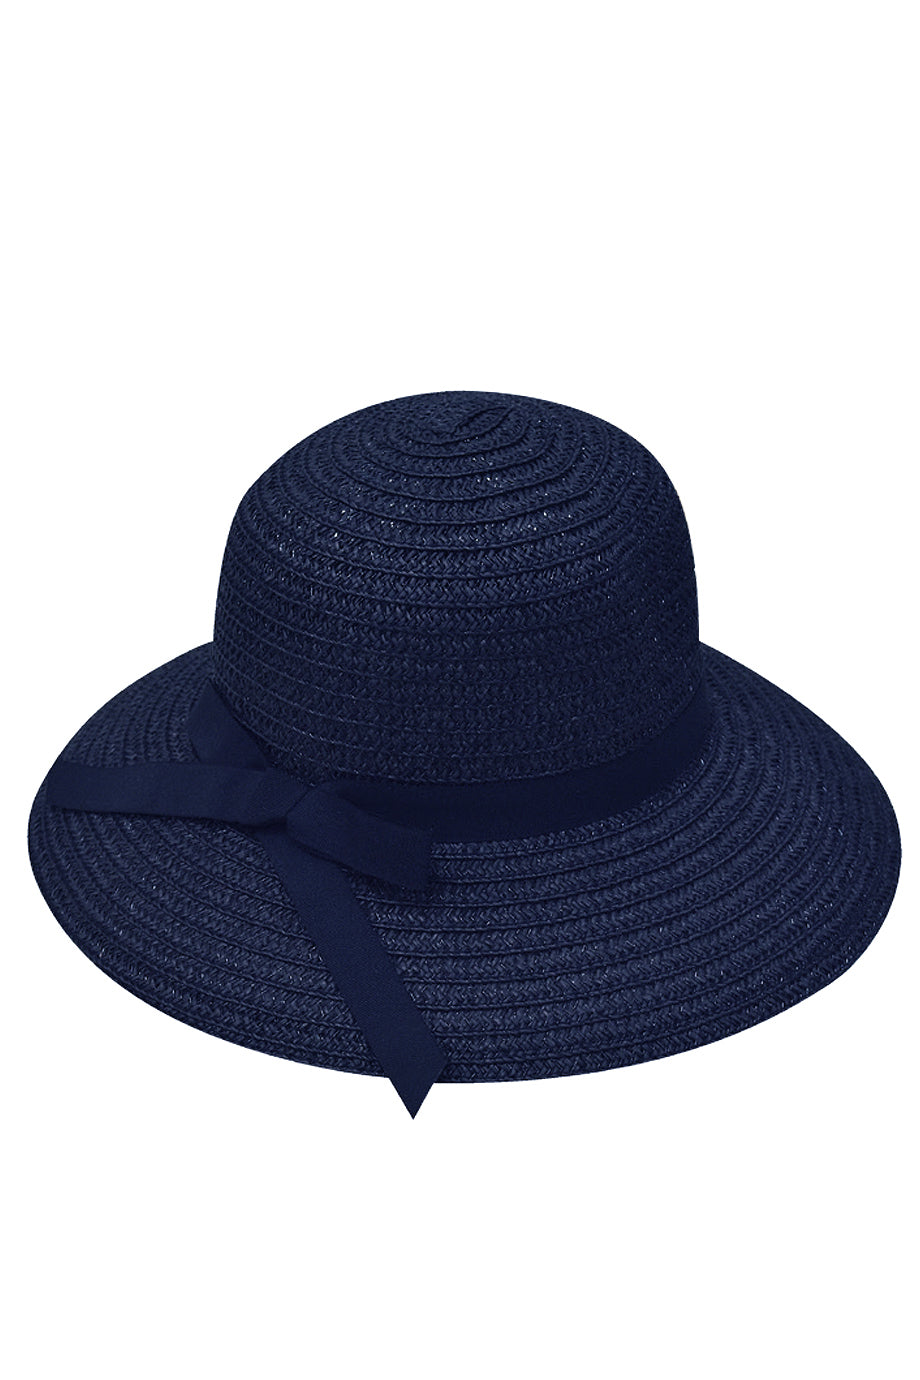 Flavia Μπλε Ψάθινο Καπέλο